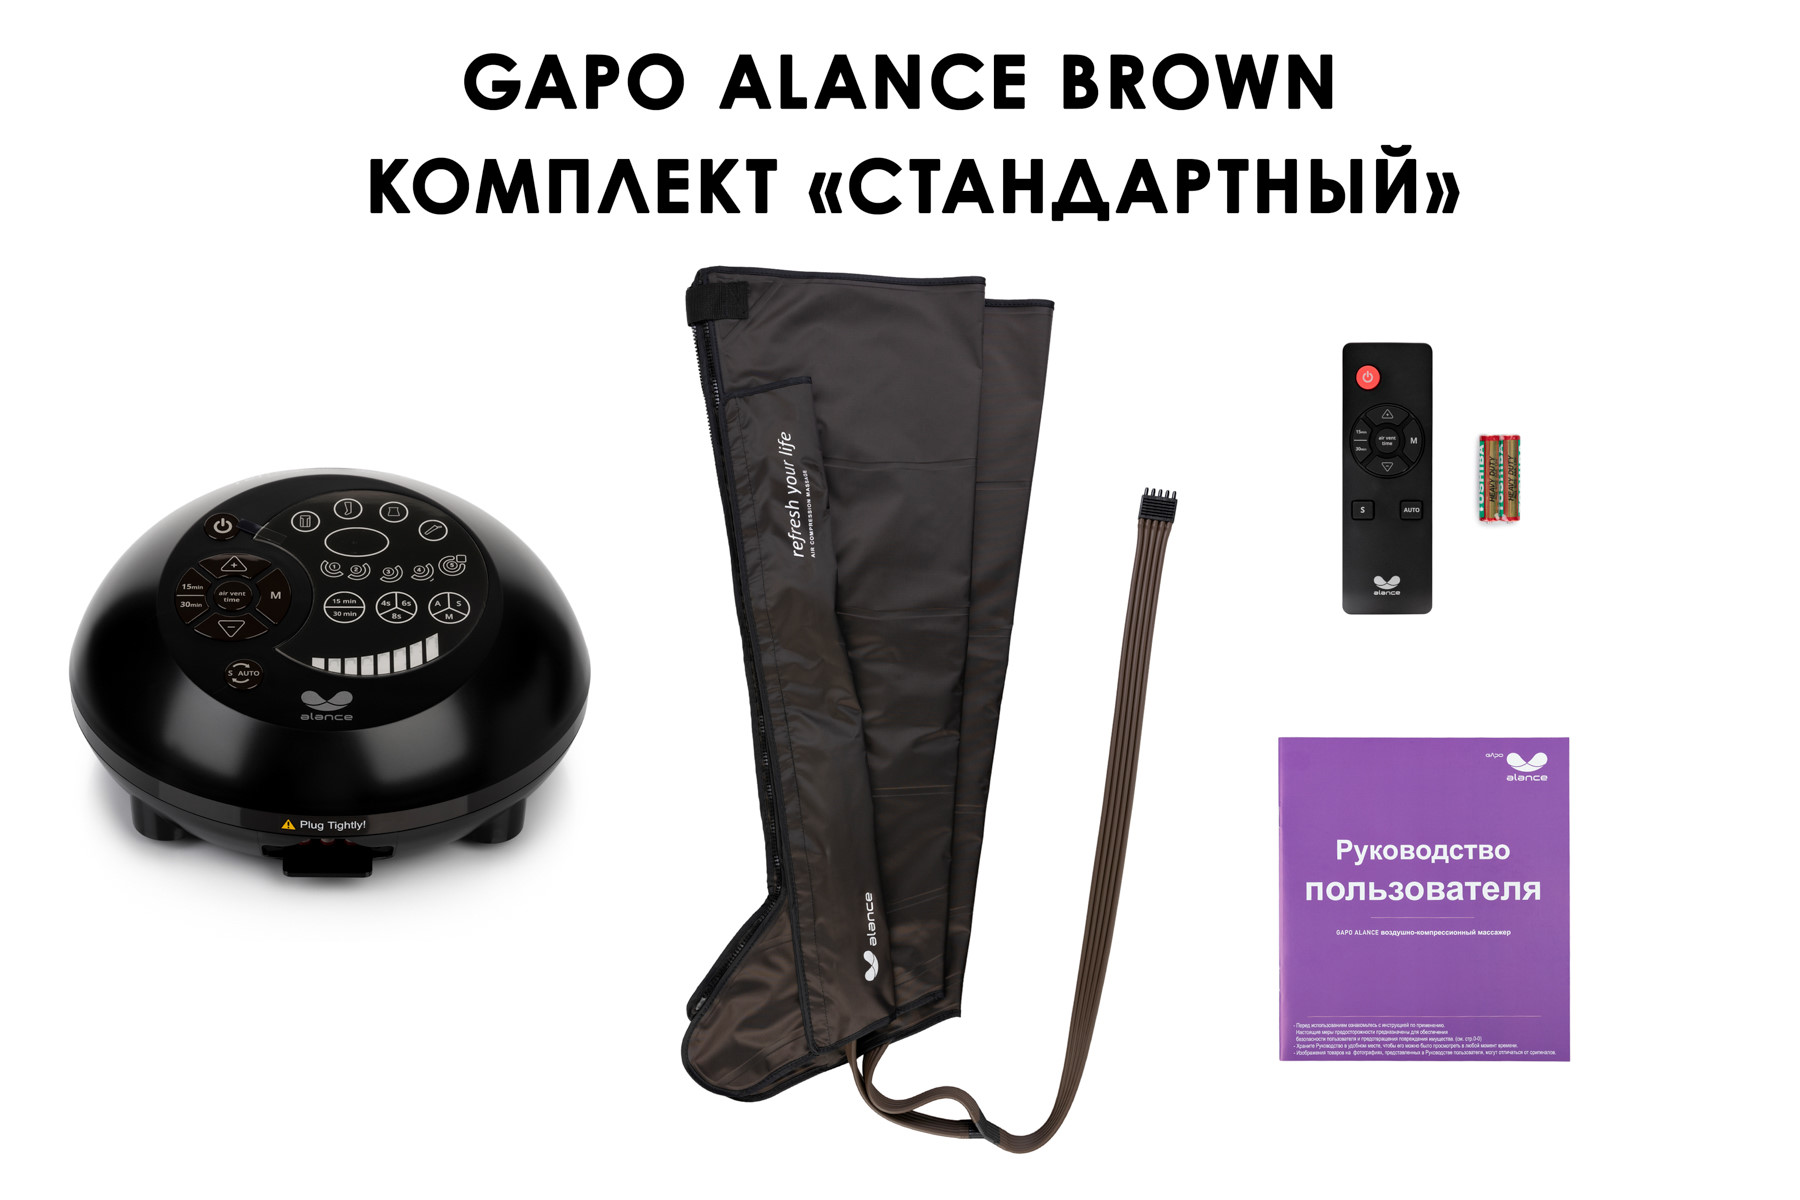 Лимфодренажный аппарат Gapo Alance GSM031 Комплект "Стандартный" (Размер XL) Brown